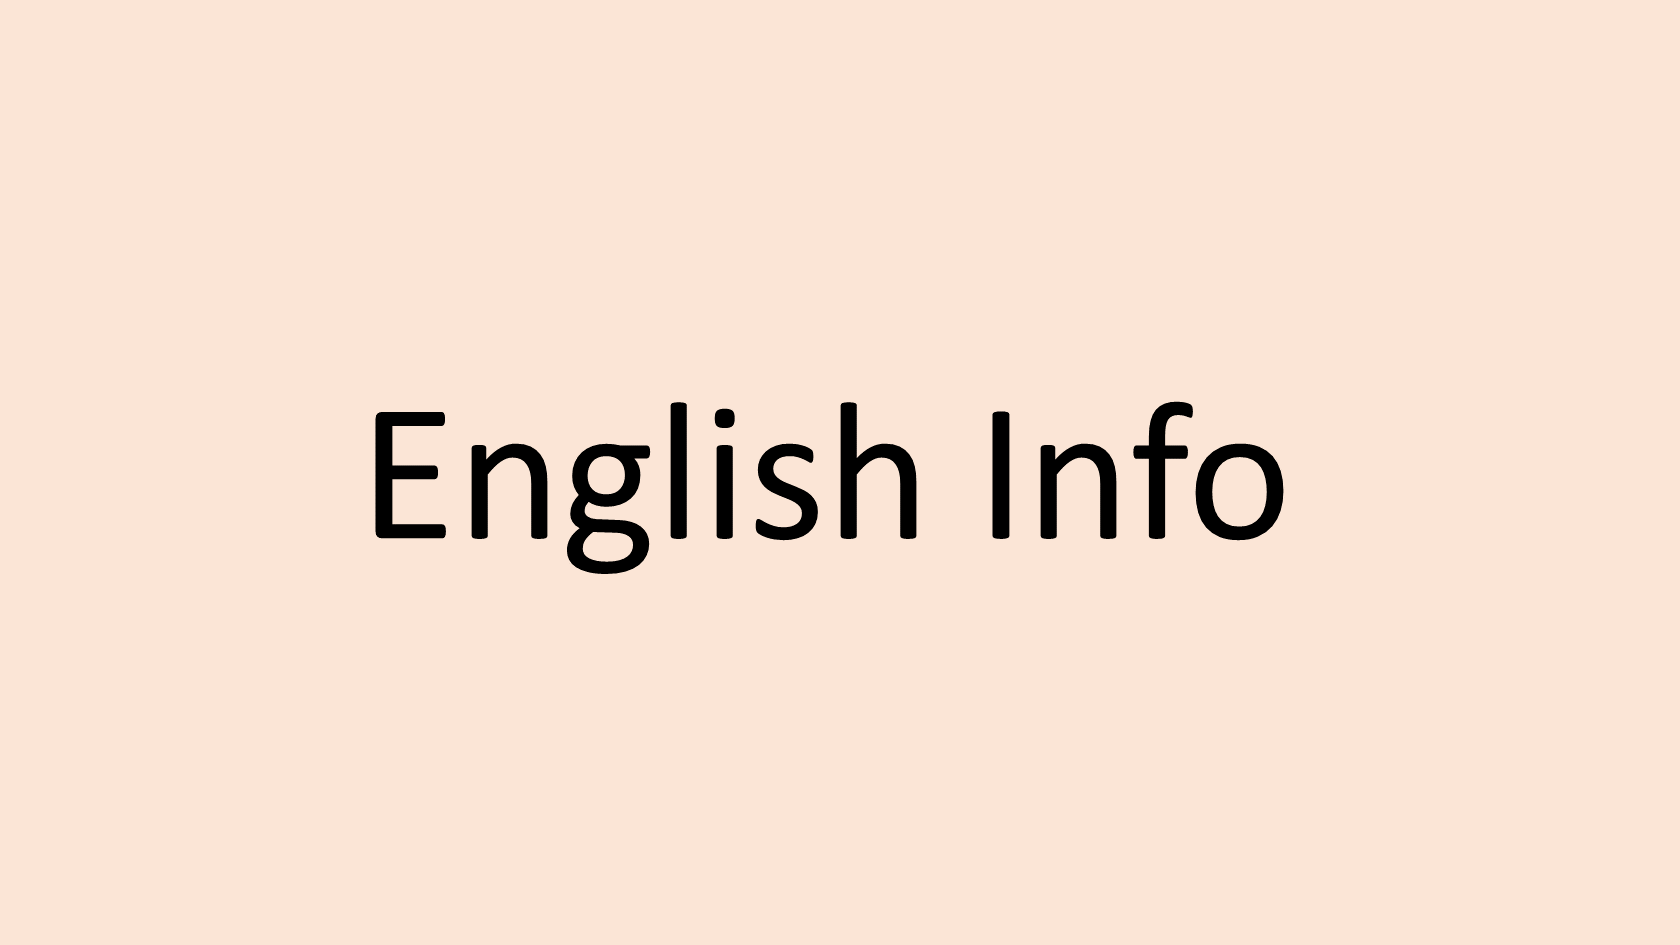 English information